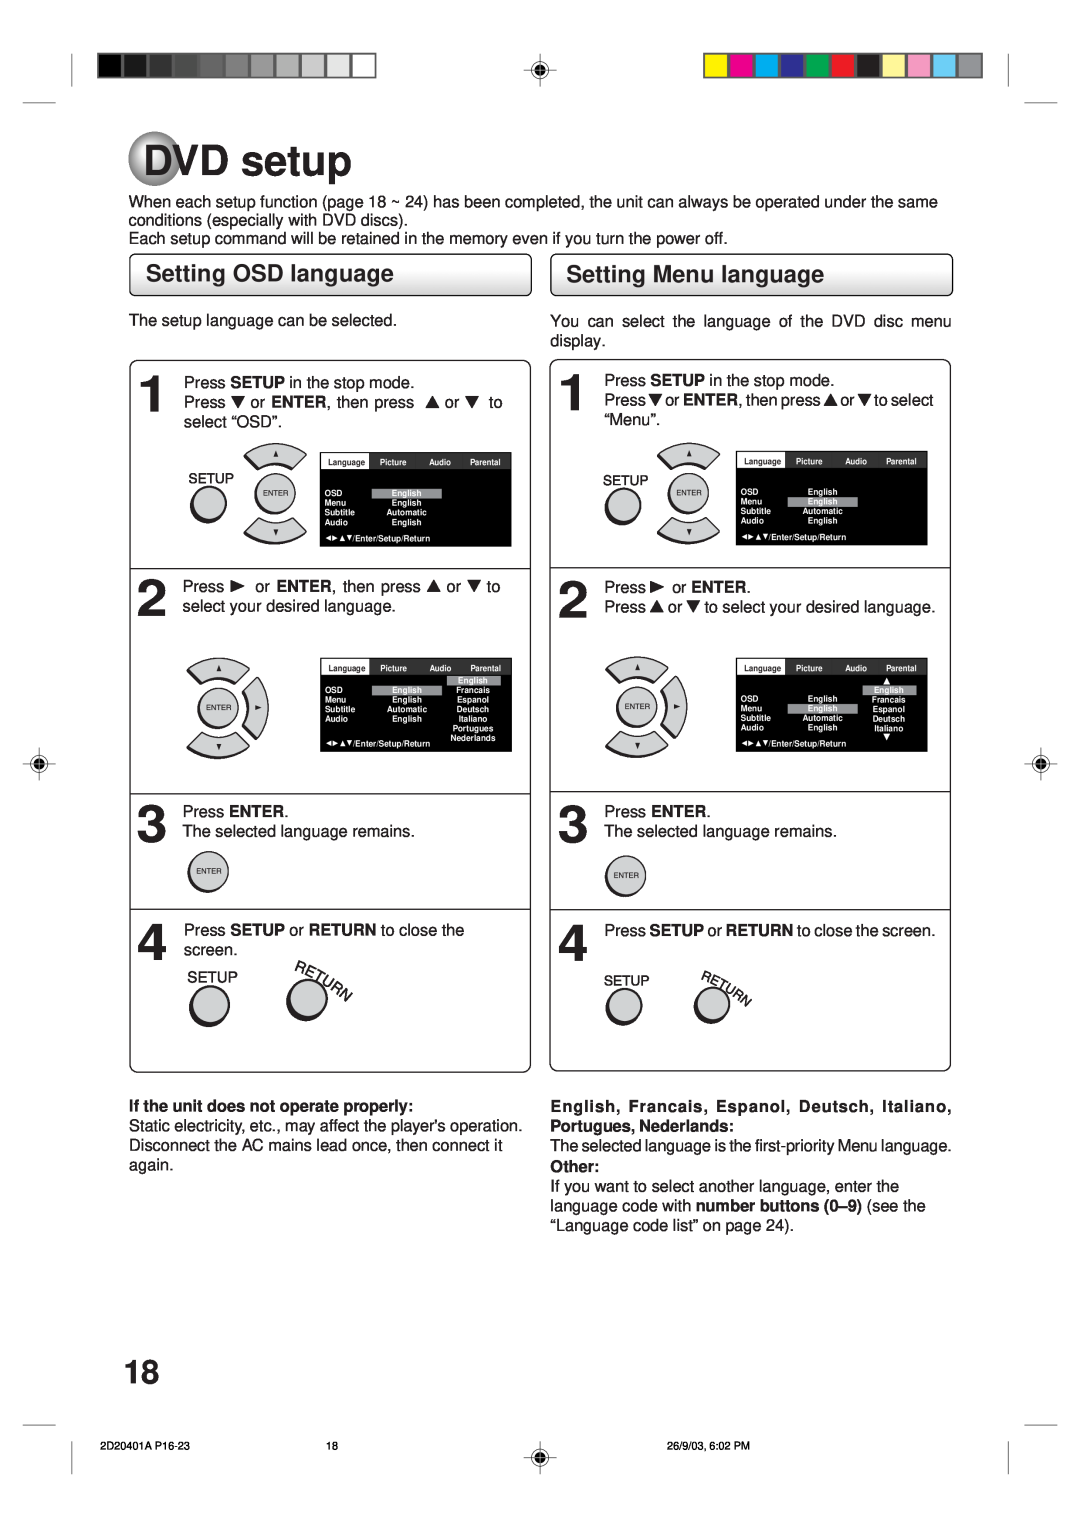 Kodak SD-63HK owner manual DVD setup, Setting OSD language, Setting Menu language, Press a or ENTER, Other 